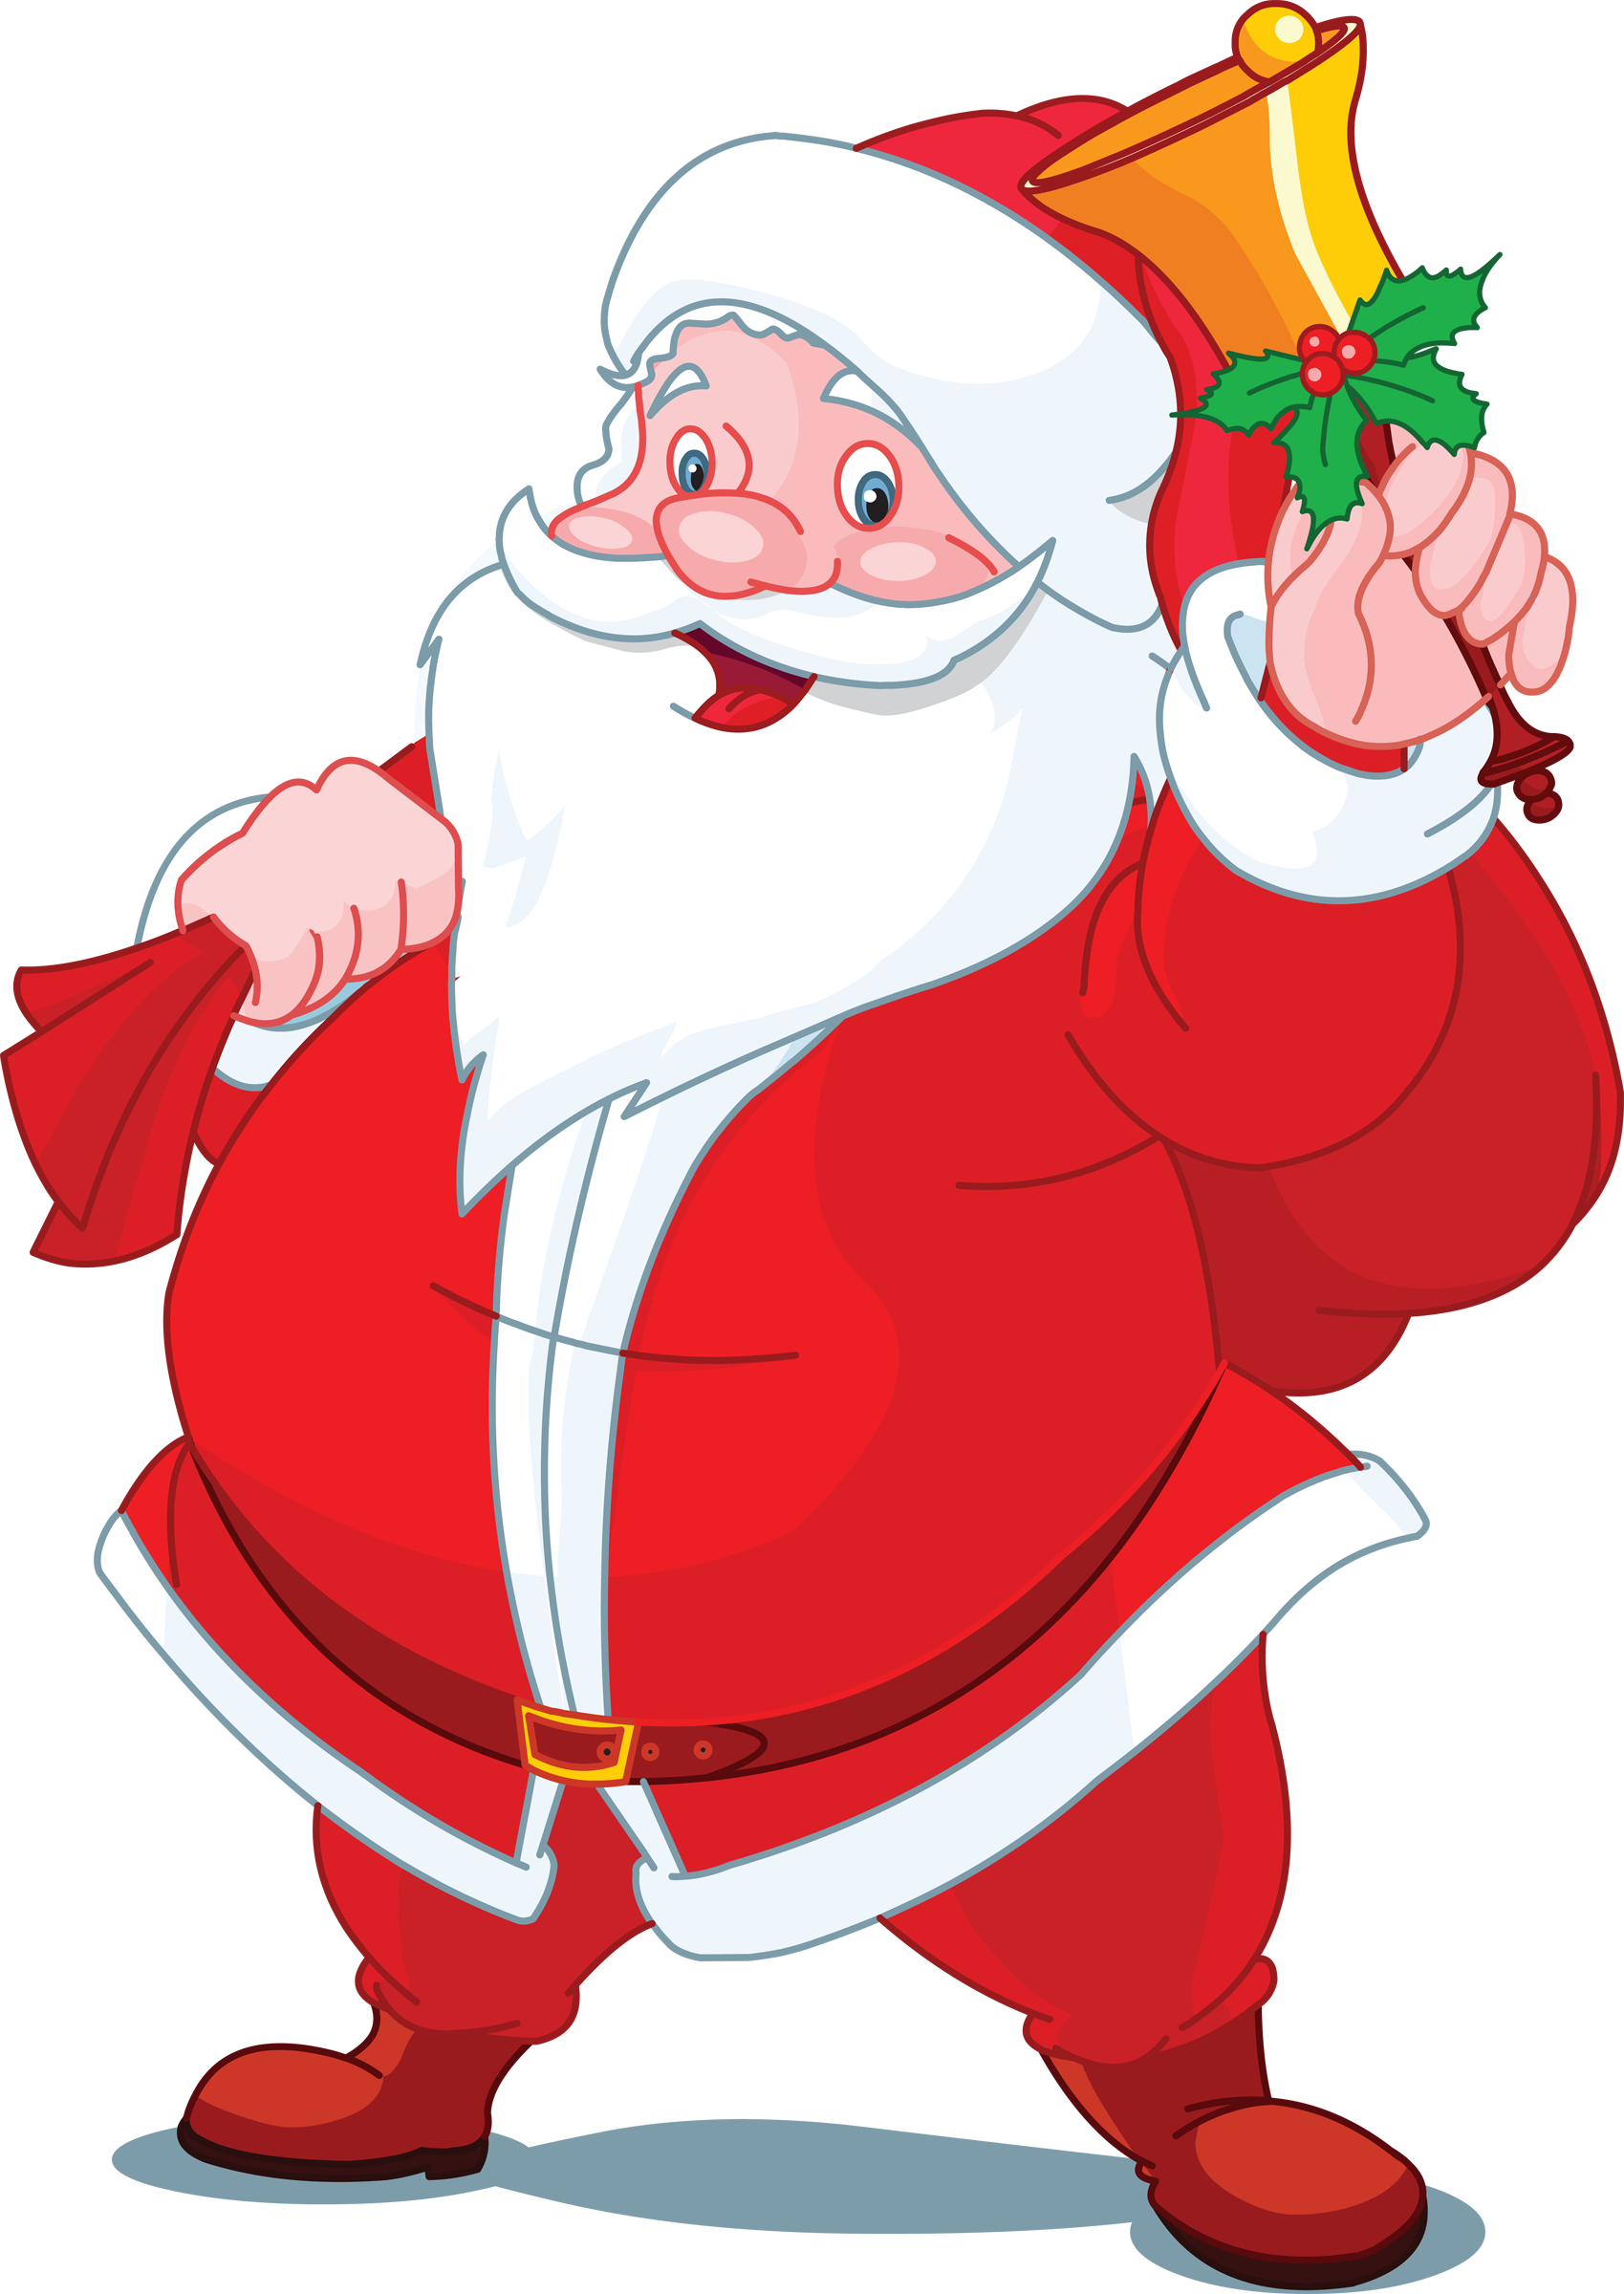 Santa Claus PNG image free Download 